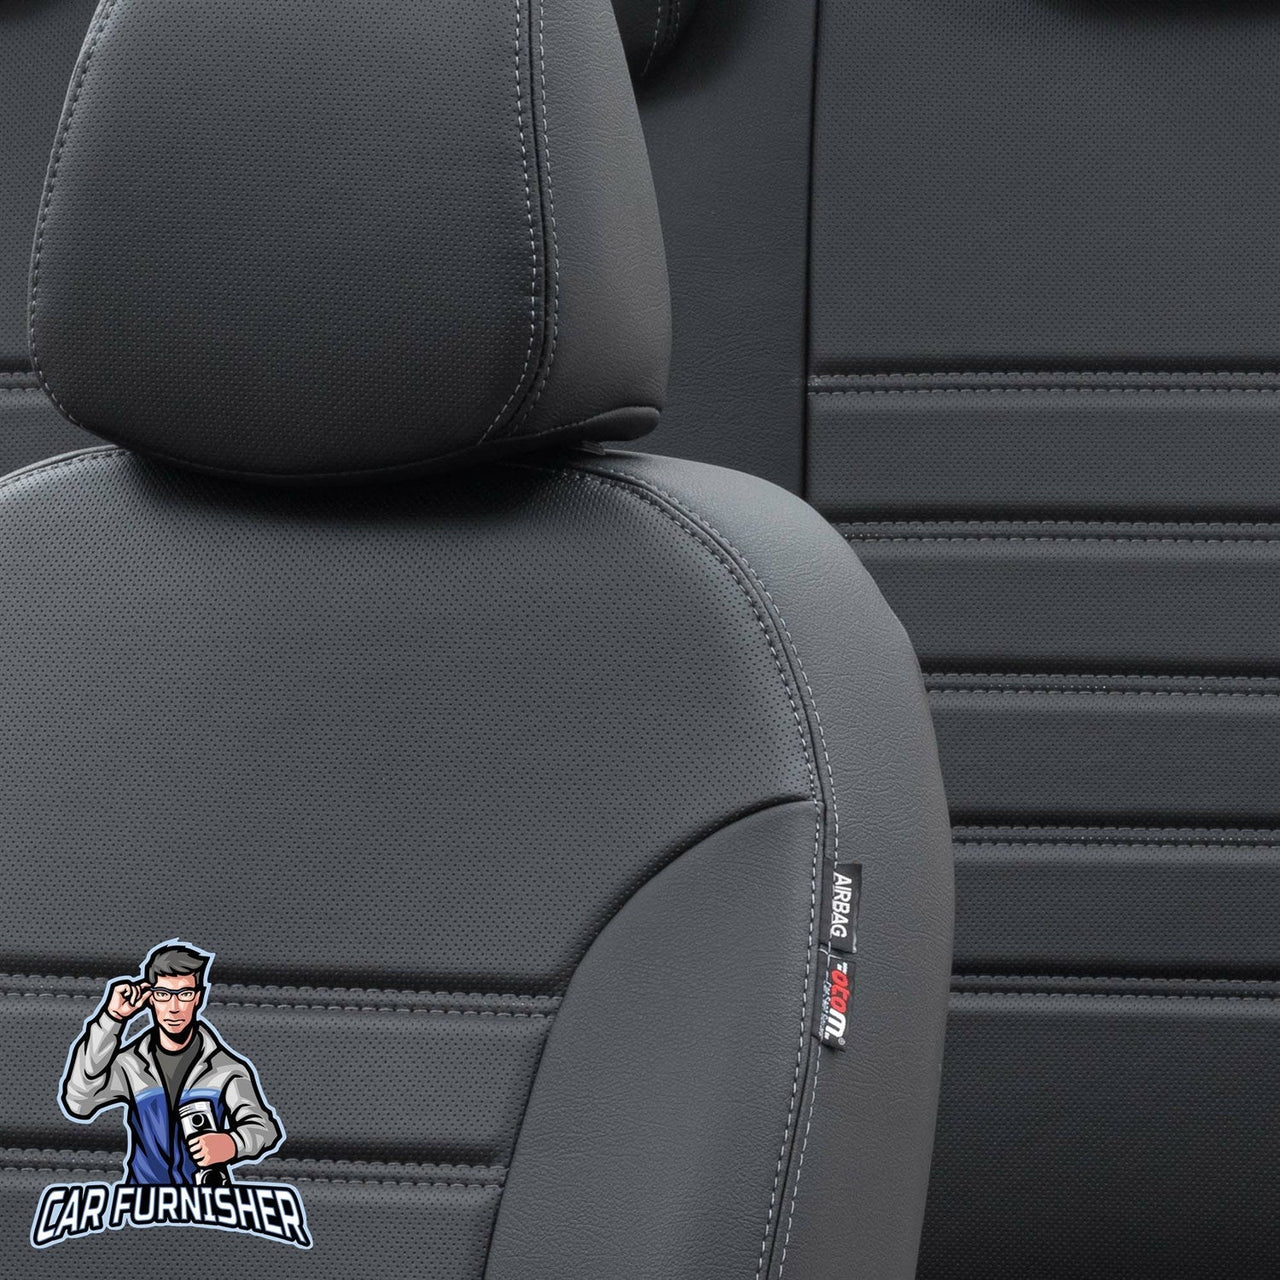 Subaru Legacy Seat Cover Istanbul Leather Design Black Leather